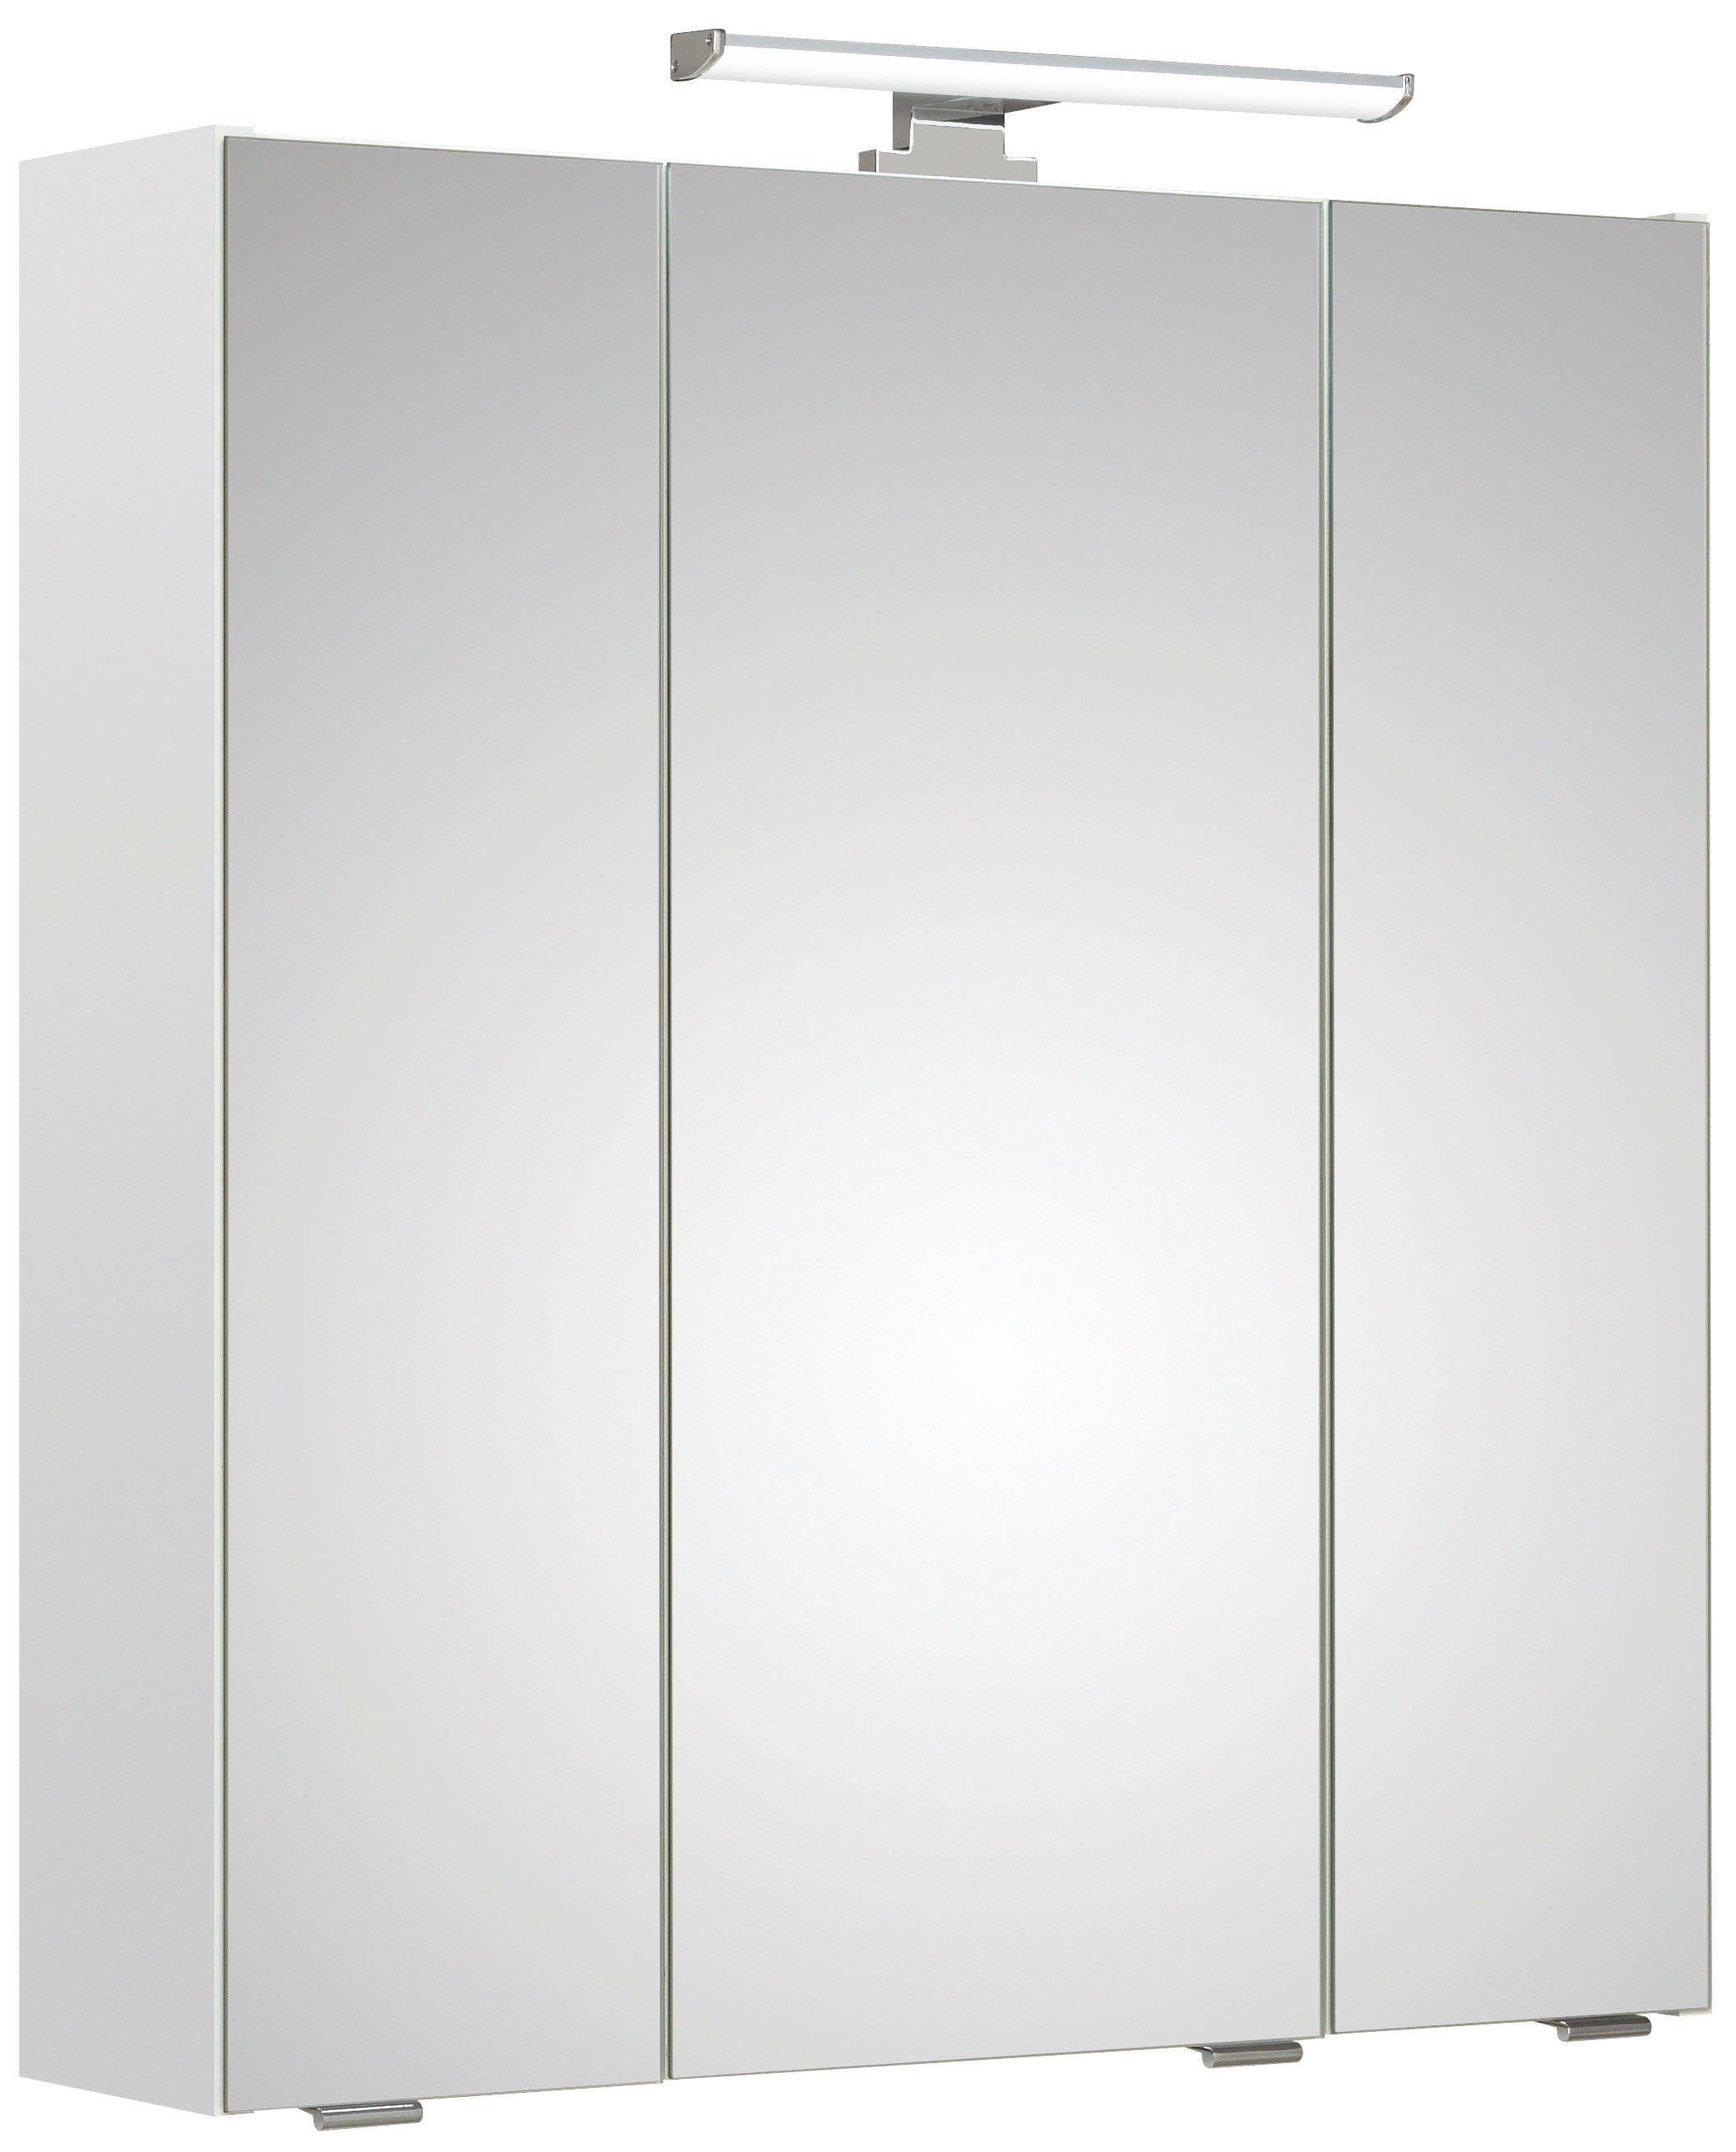 PELIPAL Spiegelschrank Quickset Breite 65 cm, 3-türig, LED-Beleuchtung, Schalter-/Steckdosenbox Weiß Glanz/Weiß Hochglanz | Weiß Glanz | Spiegelschränke